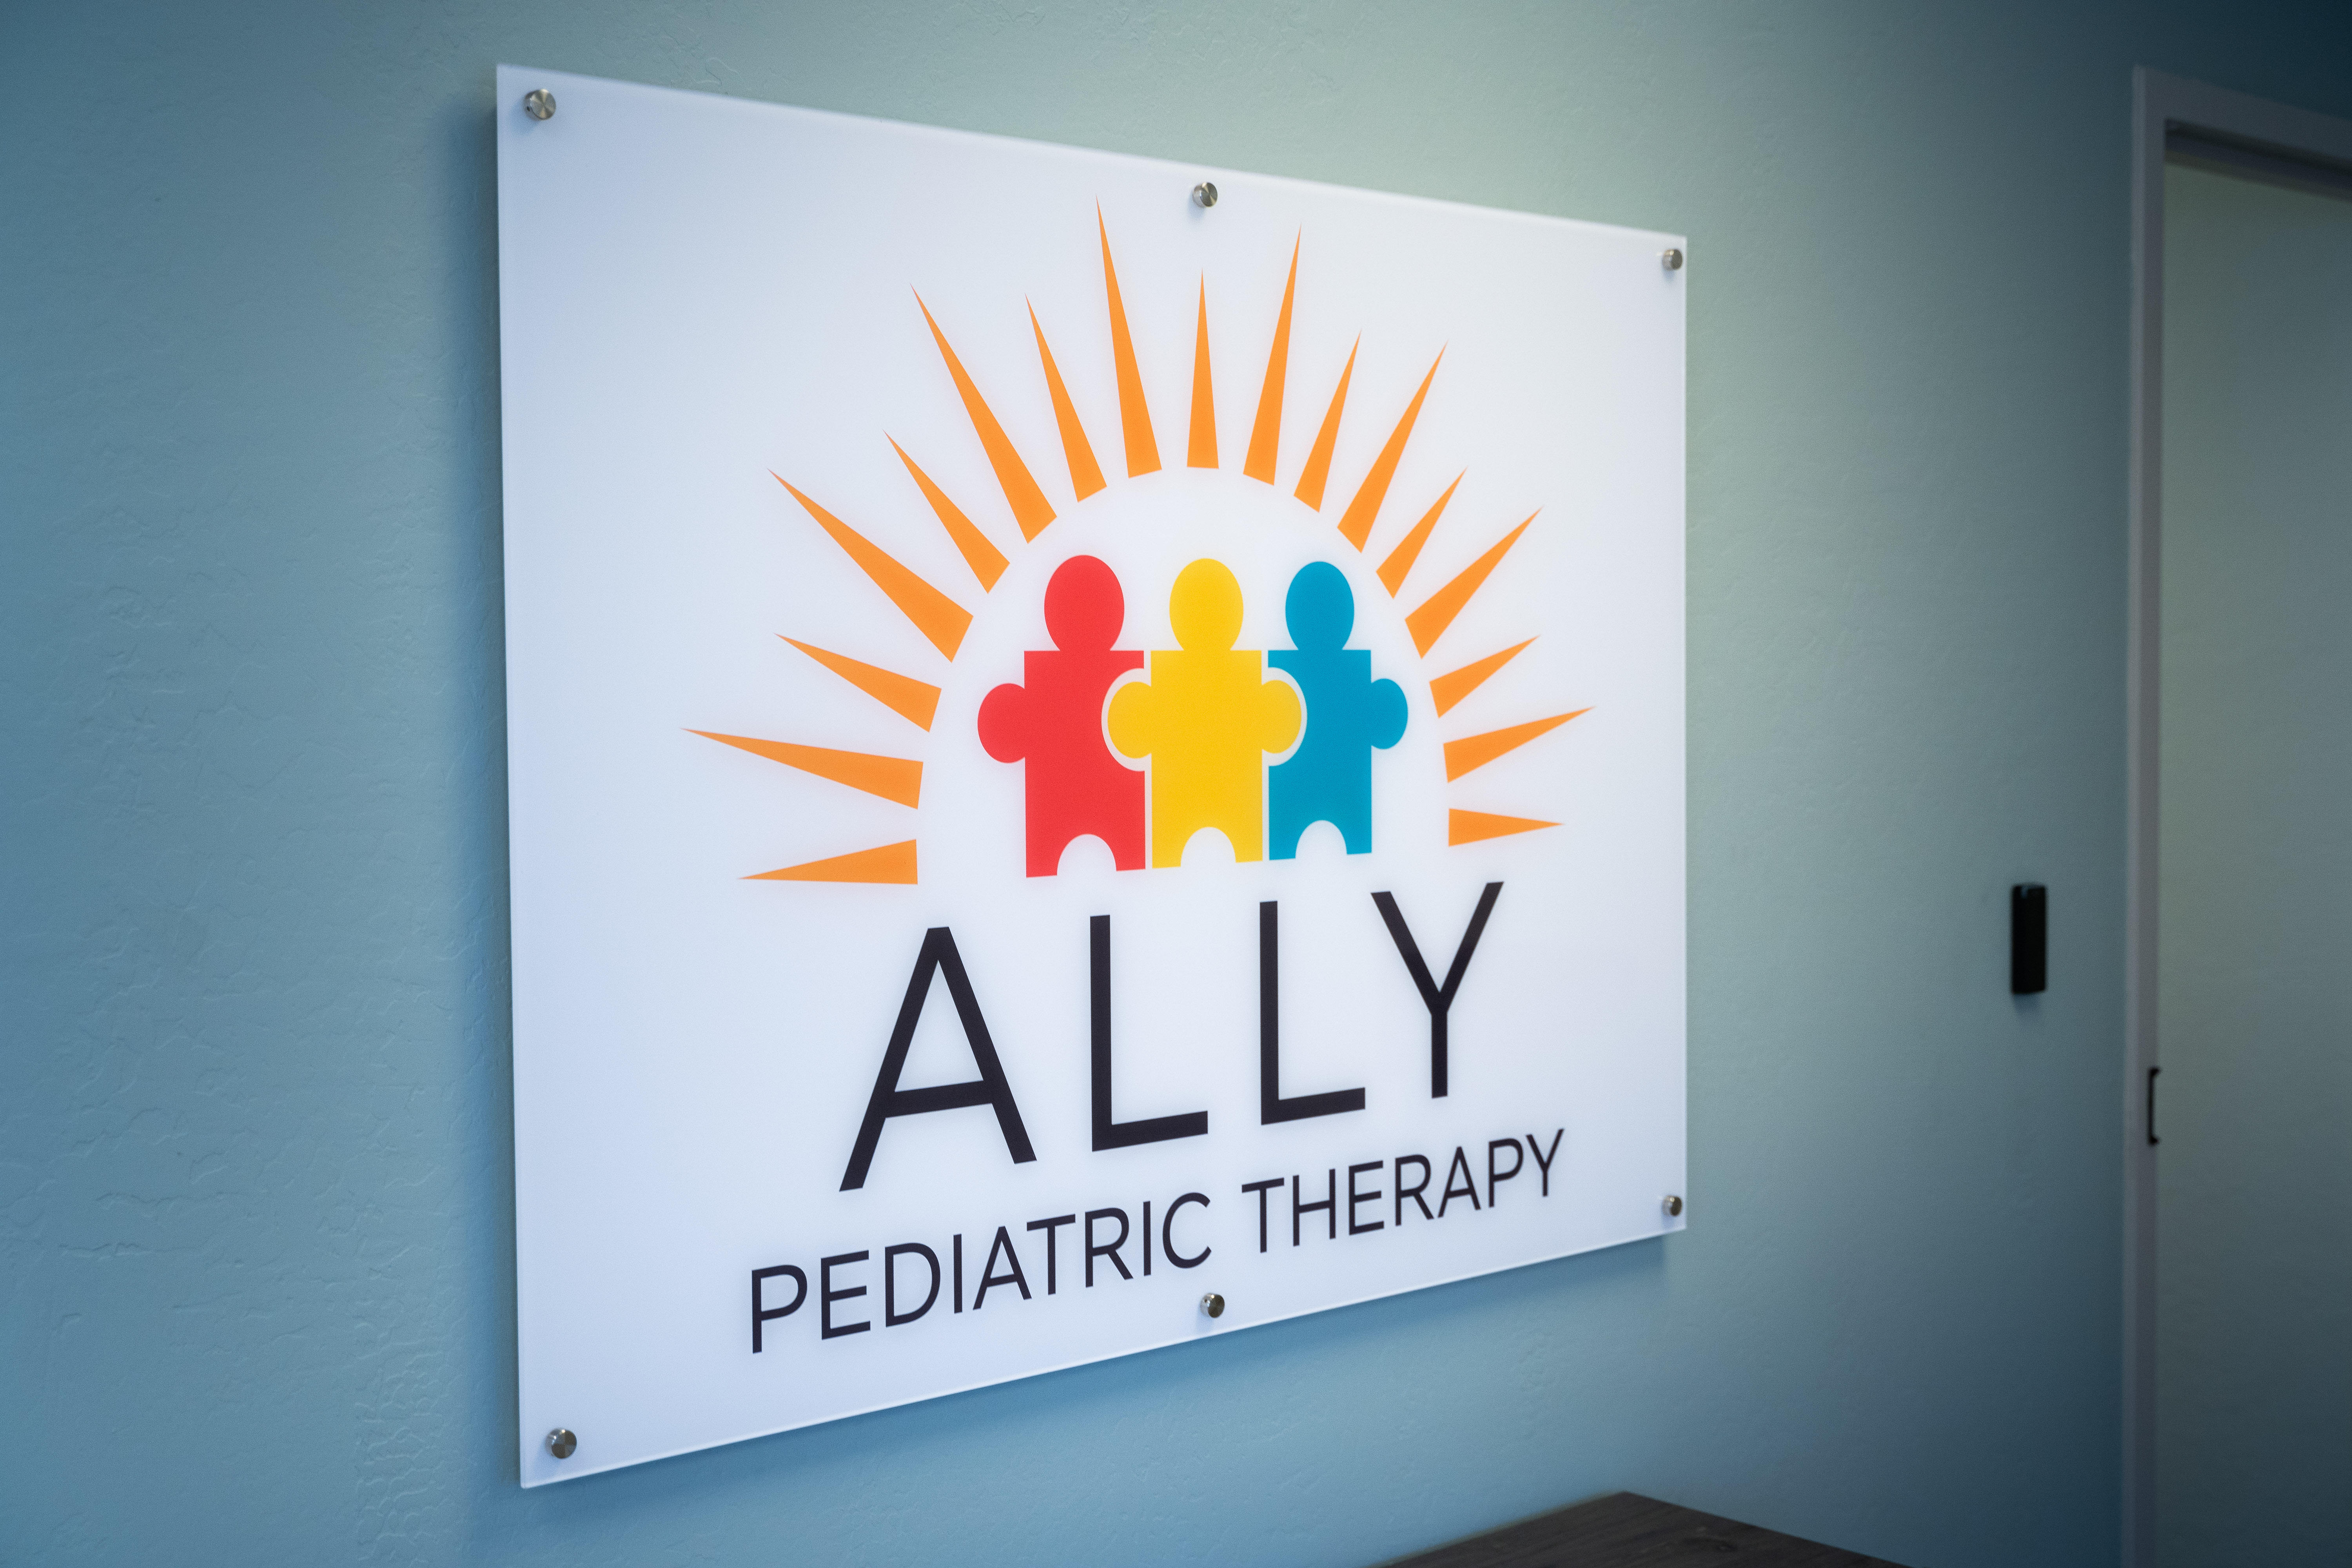 Ally Pediatric Therapy Photo